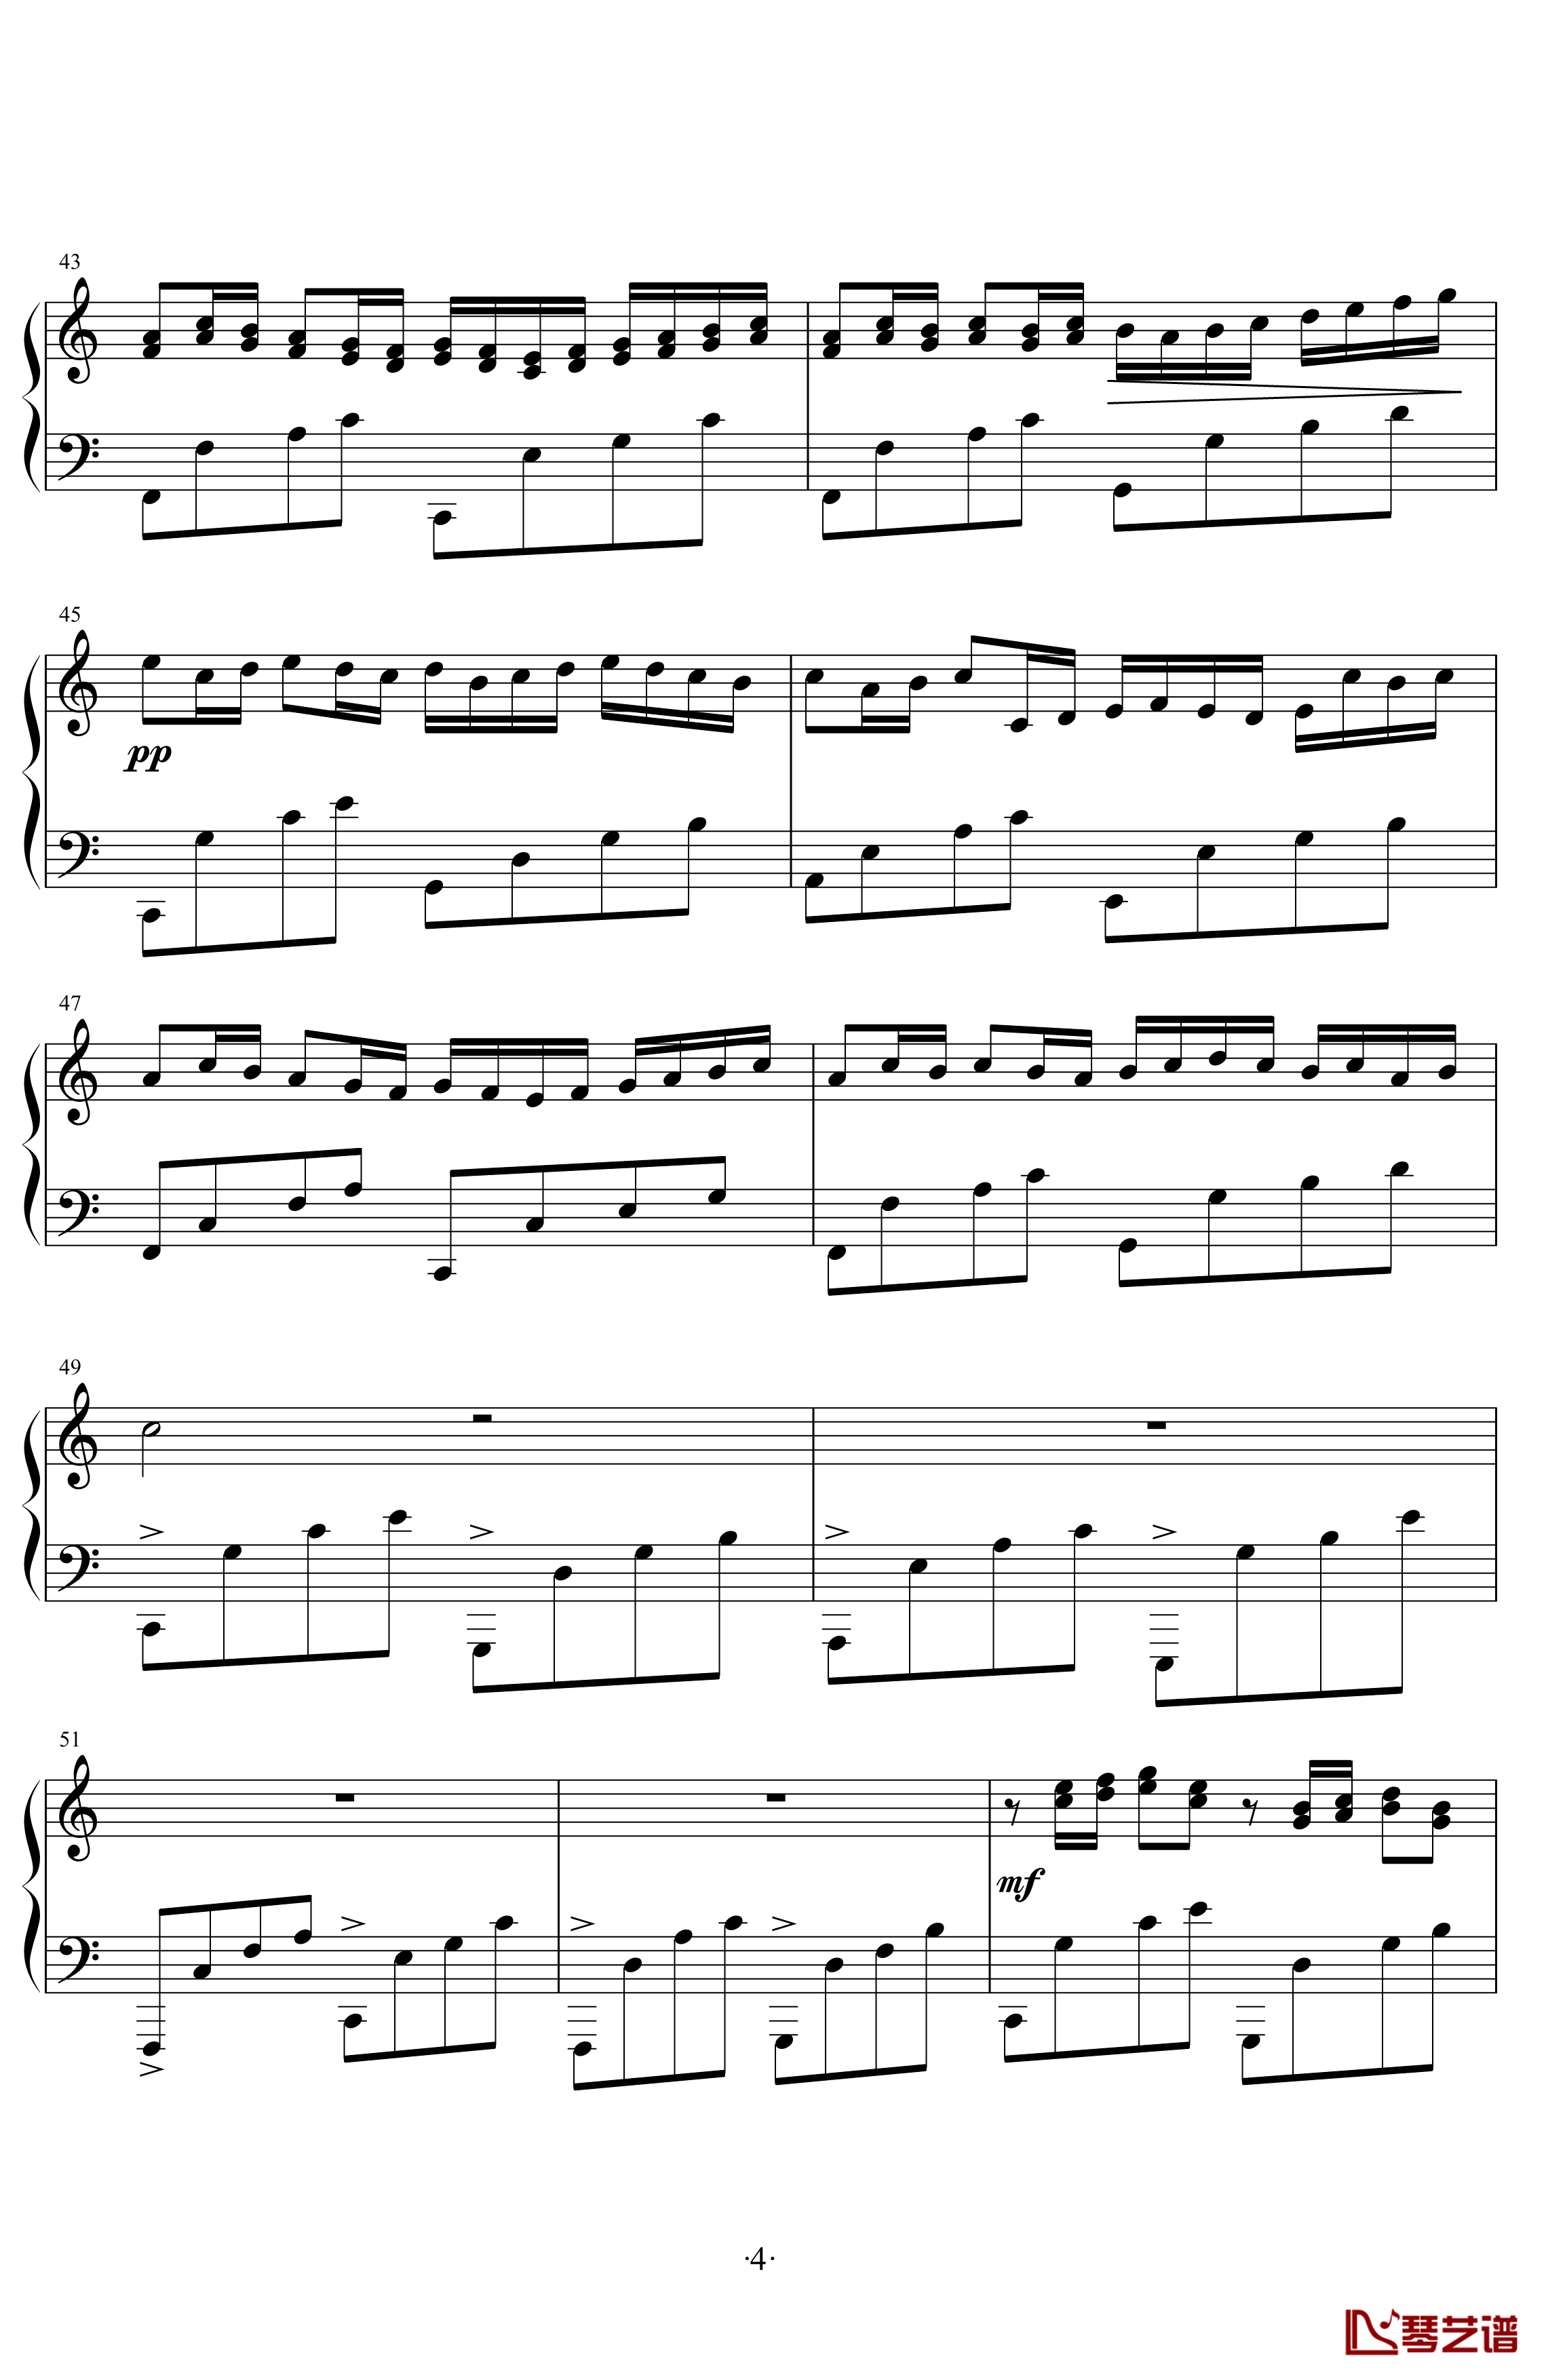 卡农变奏曲钢琴谱-Variations on the Canon by Pachelbel V.L.最终定本-George Winston4